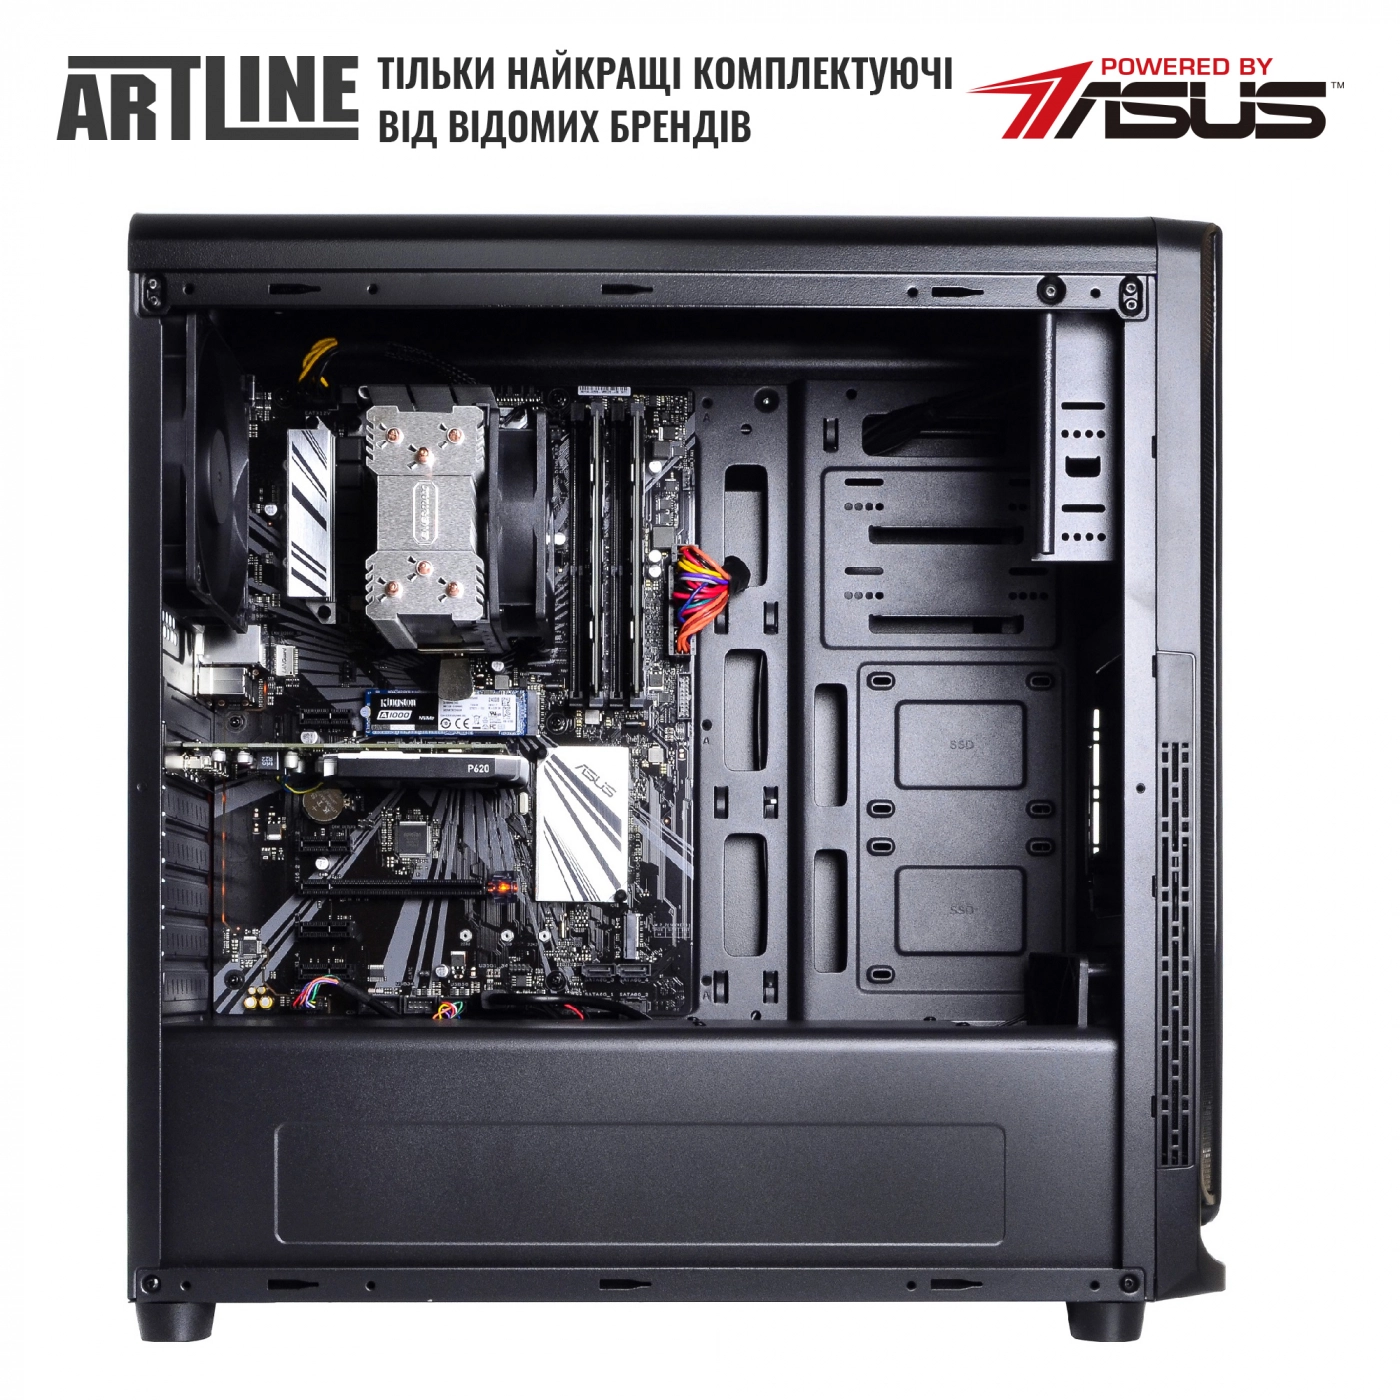 Купити Сервер ARTLINE Business T25v37 - фото 5